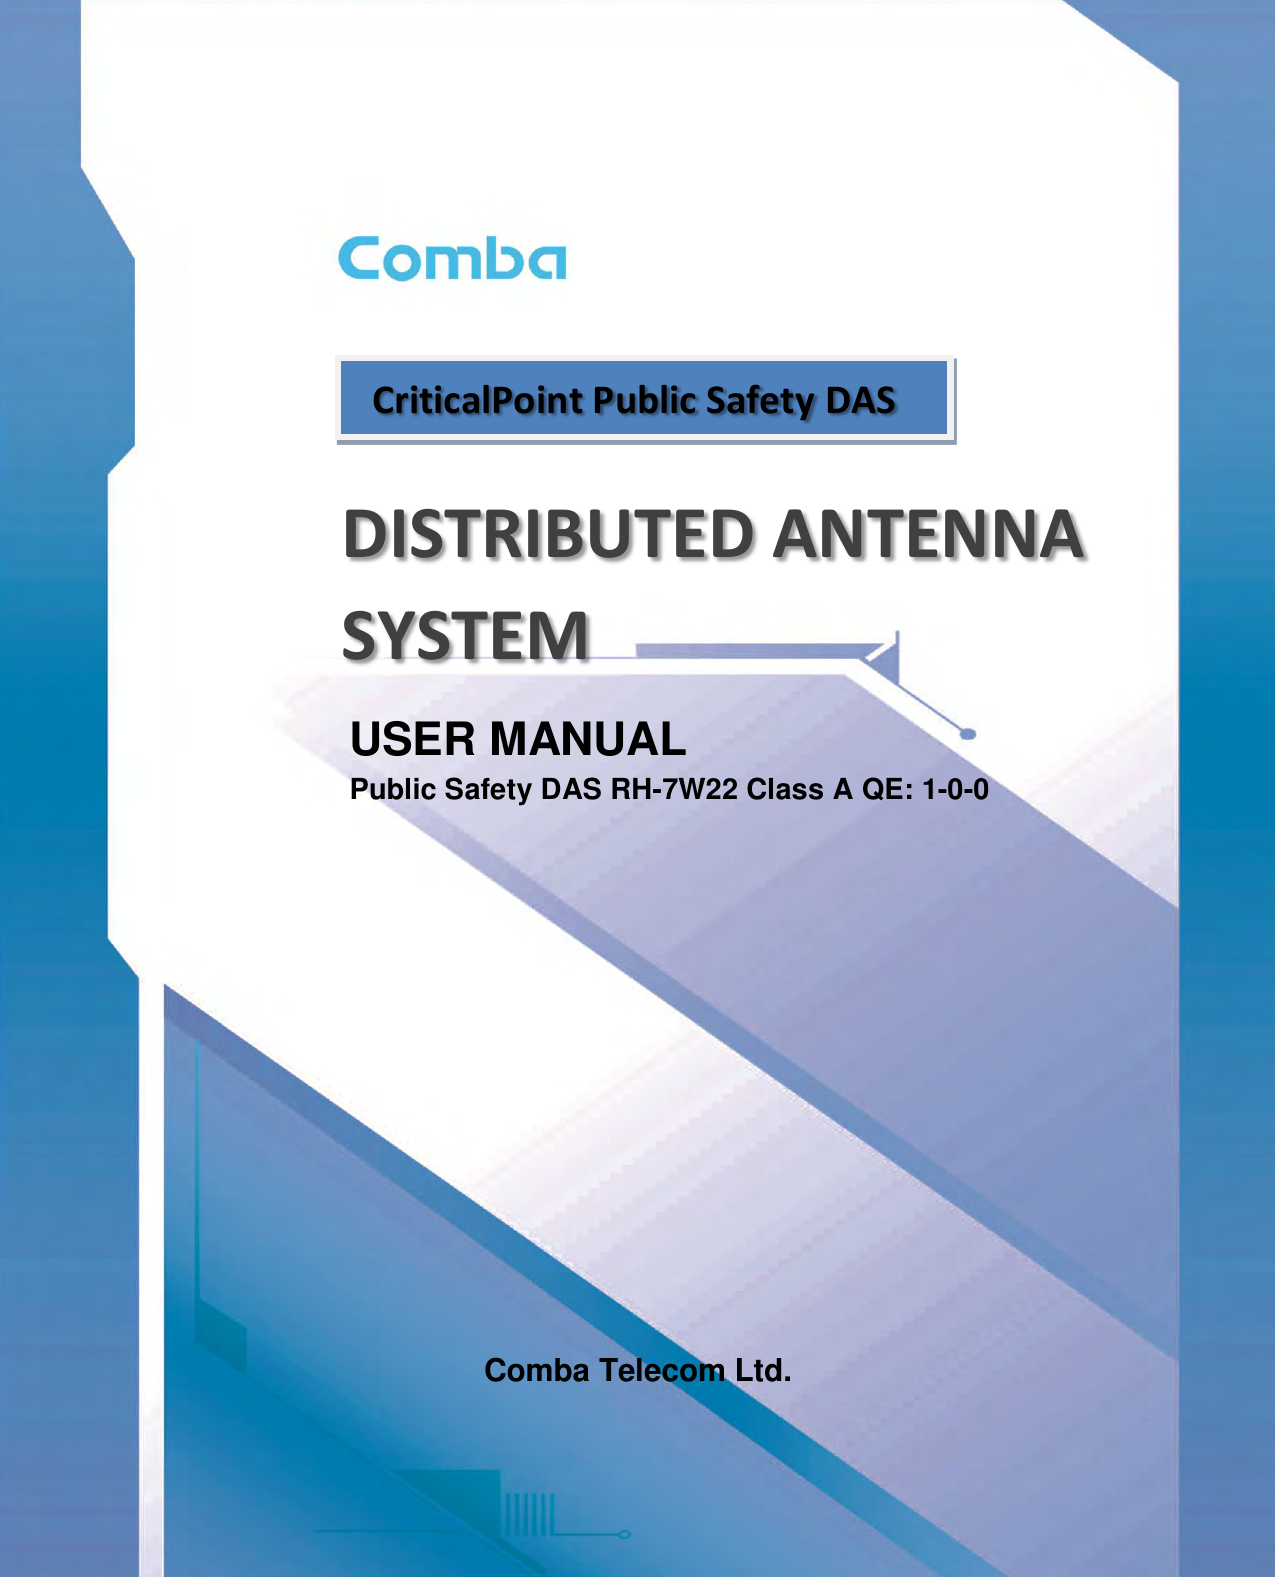              DISTRIBUTED ANTENNA SYSTEM USER MANUAL Public Safety DAS RH-7W22 Class A QE: 1-0-0            Comba Telecom Ltd. CriticalPoint Public Safety DAS 